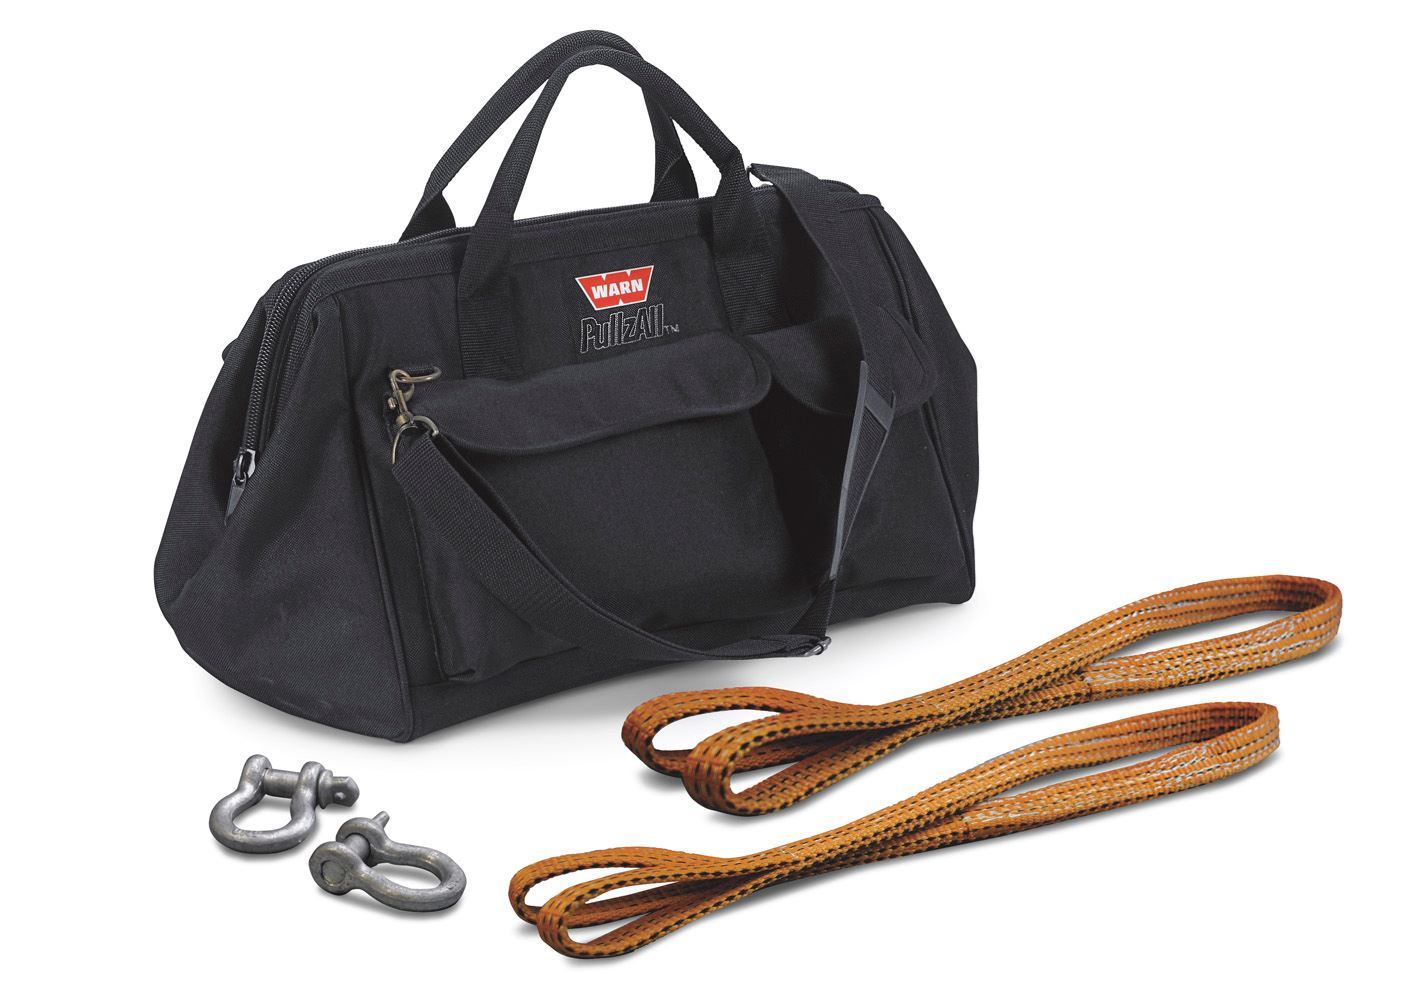 WARN PullzAll Rigging Kit w/ Carry Bag